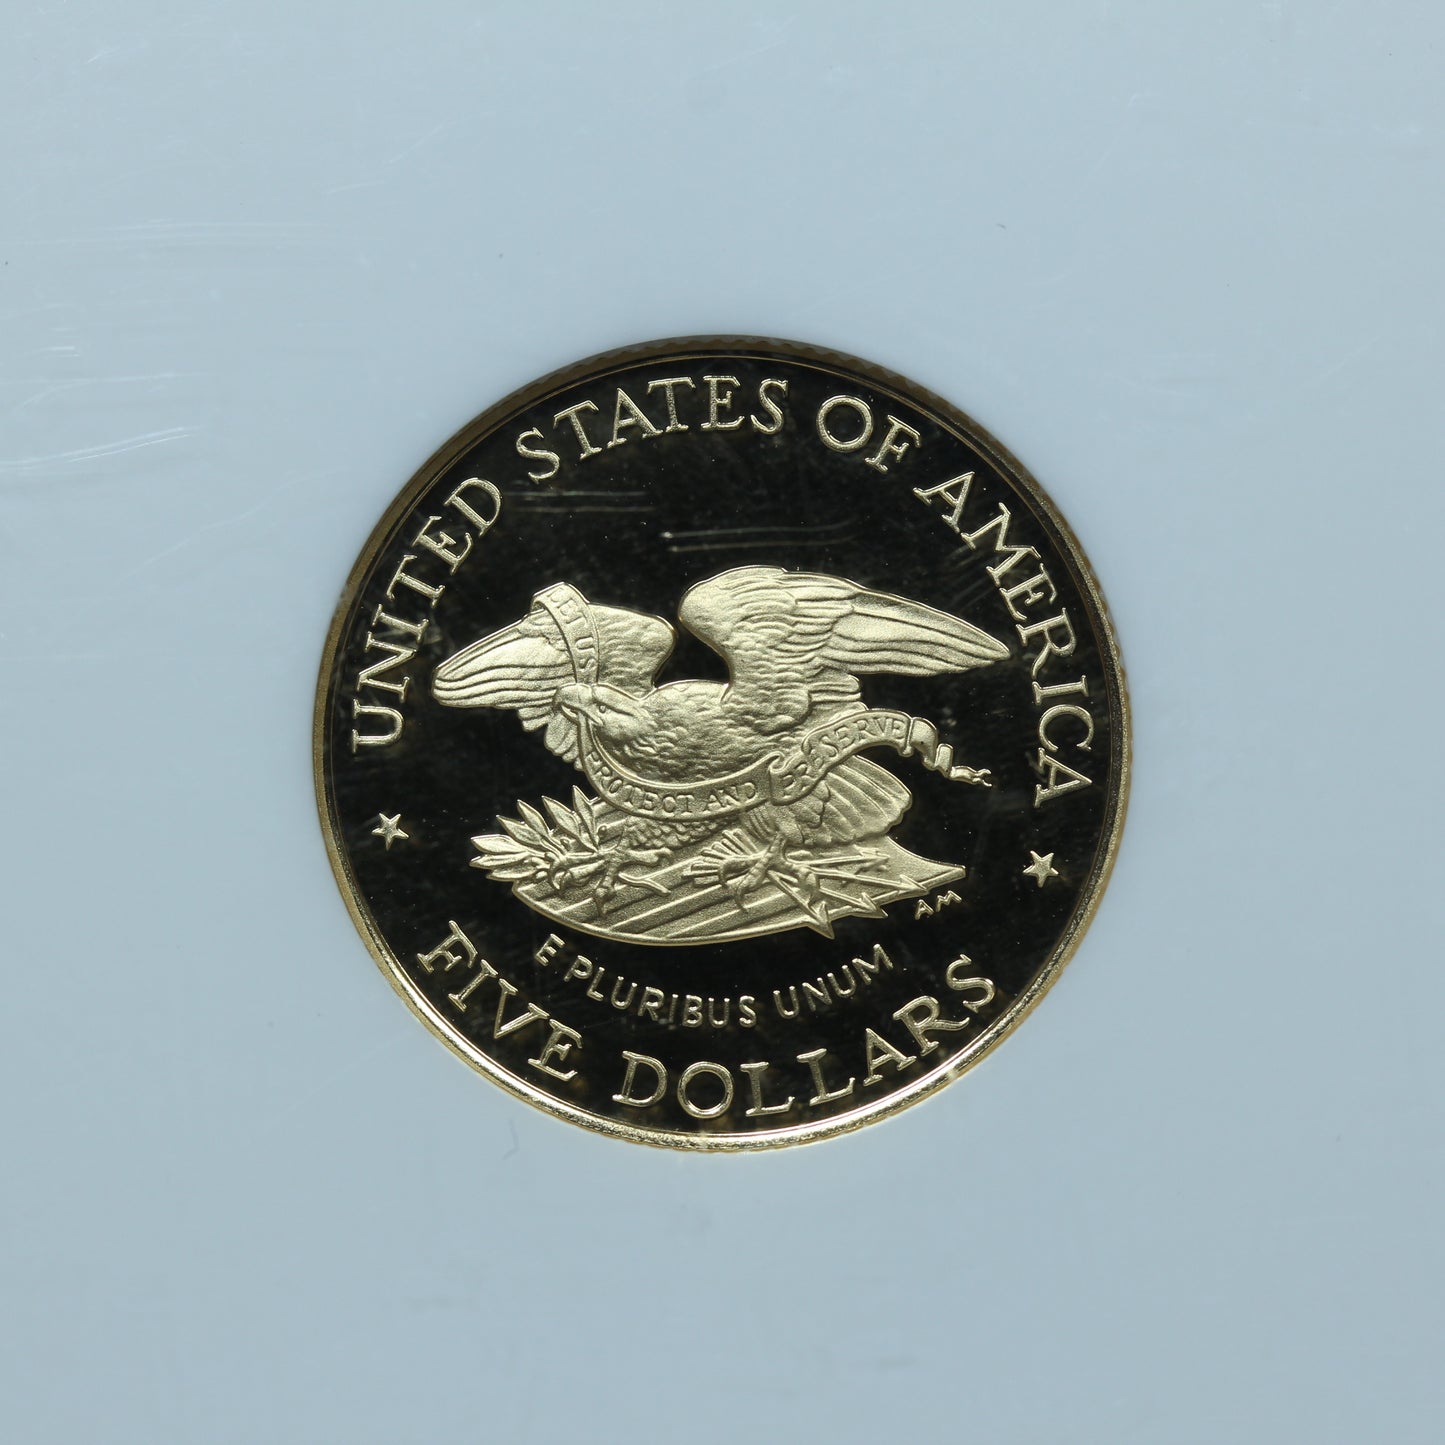 1995 W Gold $5 Commemorative Civil War Proof - NGC PF 70 Ultra Cameo